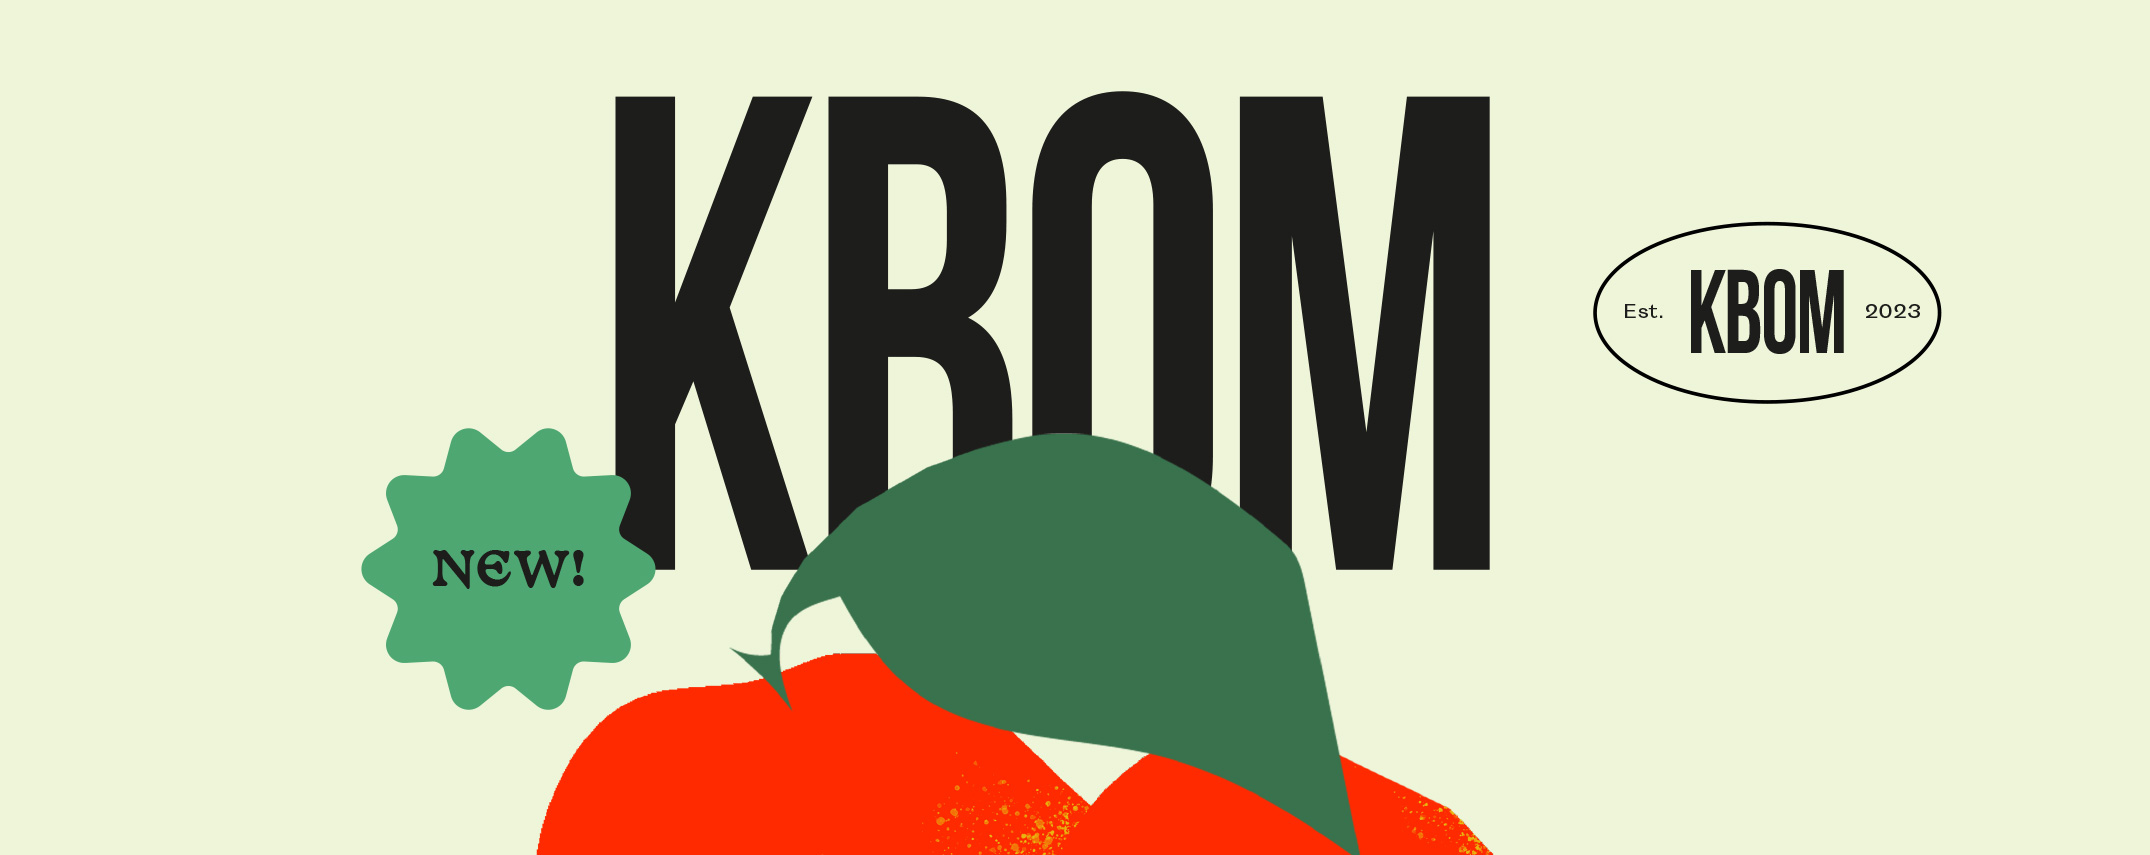 Kbom logo